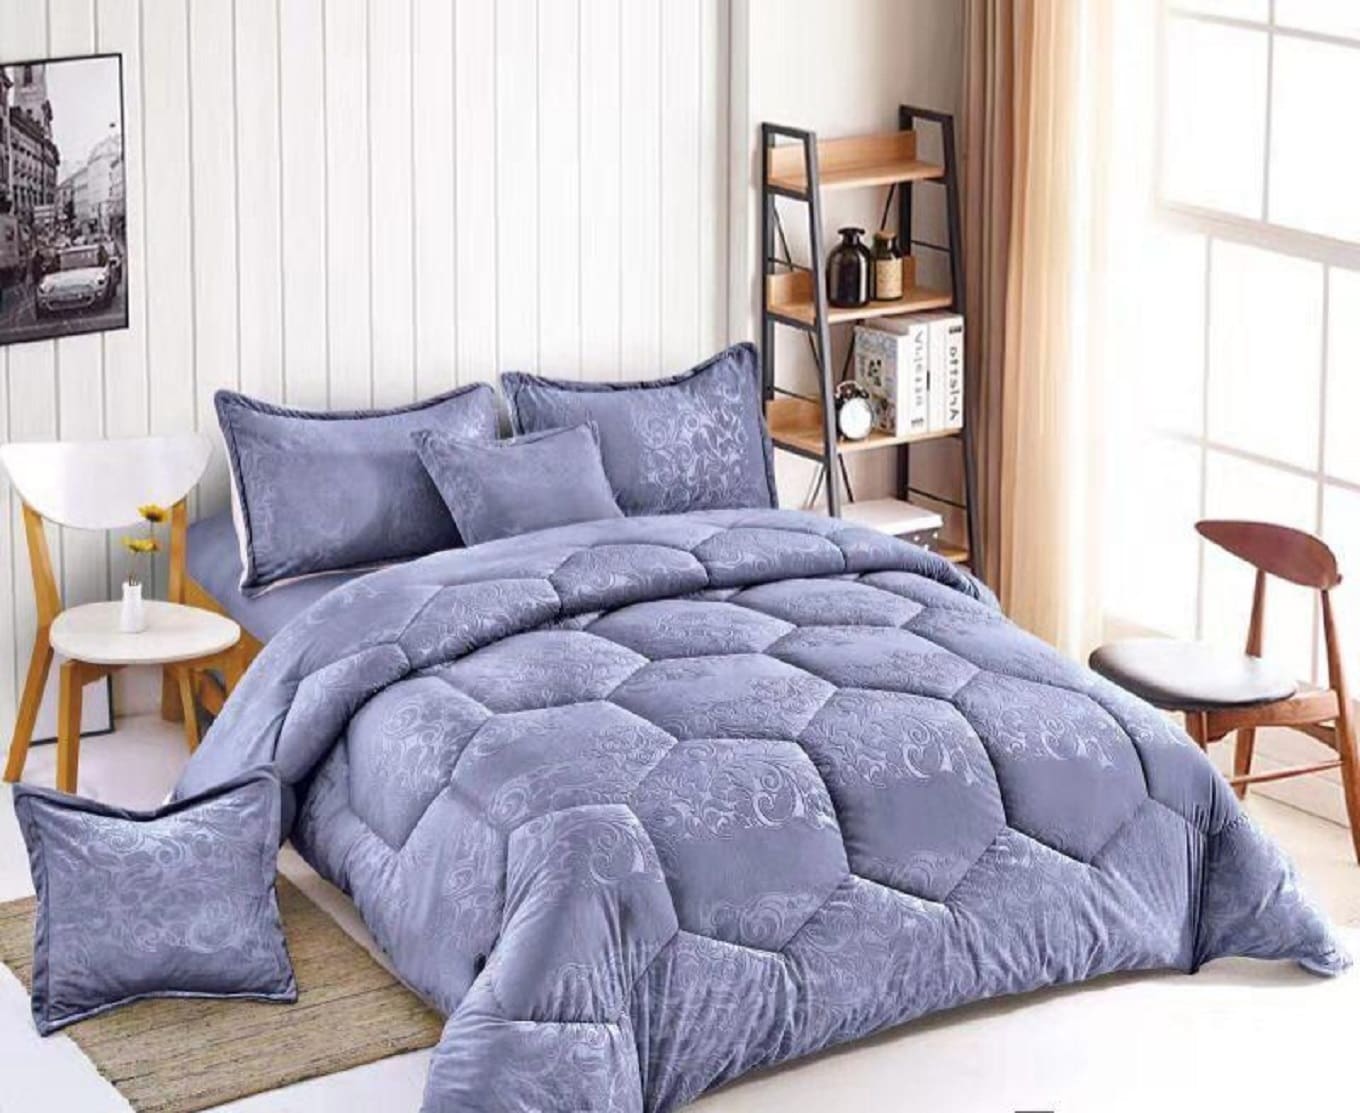 Buy Comfy 6pcs Geometric Design Cotton King Comforter Set Dark Grey Online Shop Home Care On Carrefour Uae